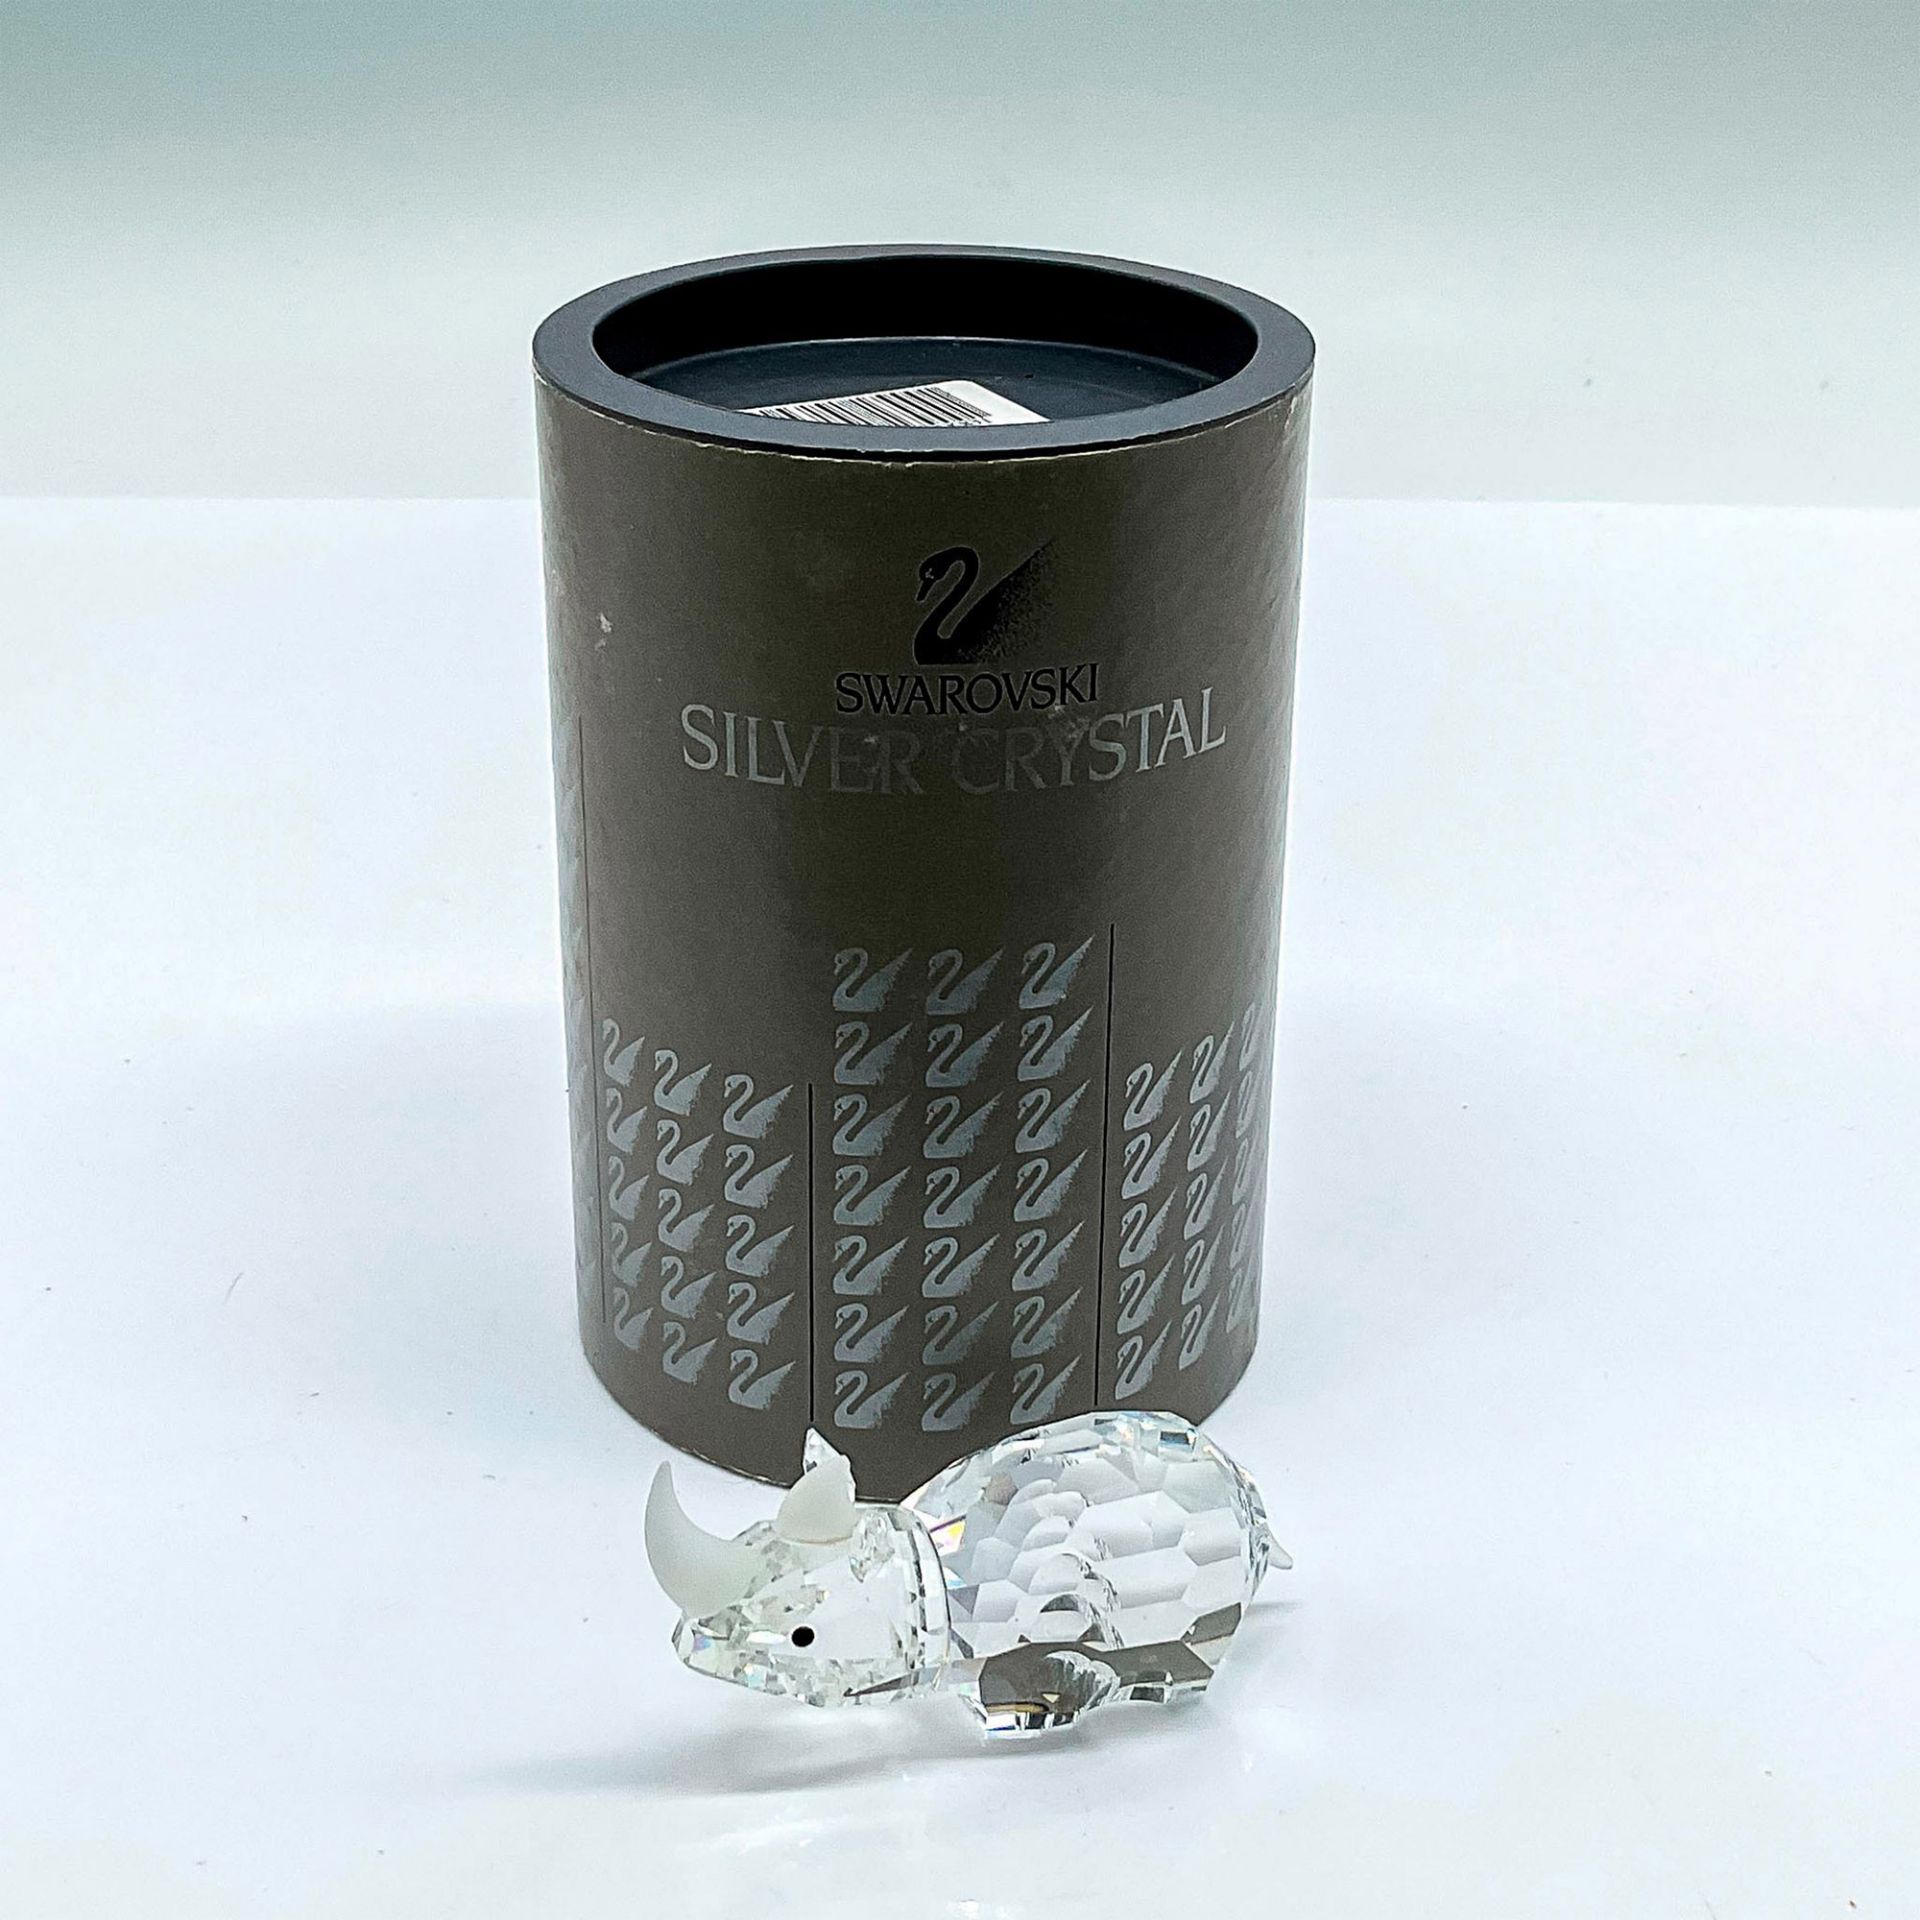 Swarovski Silver Crystal Figurine, Rhino - Image 4 of 4